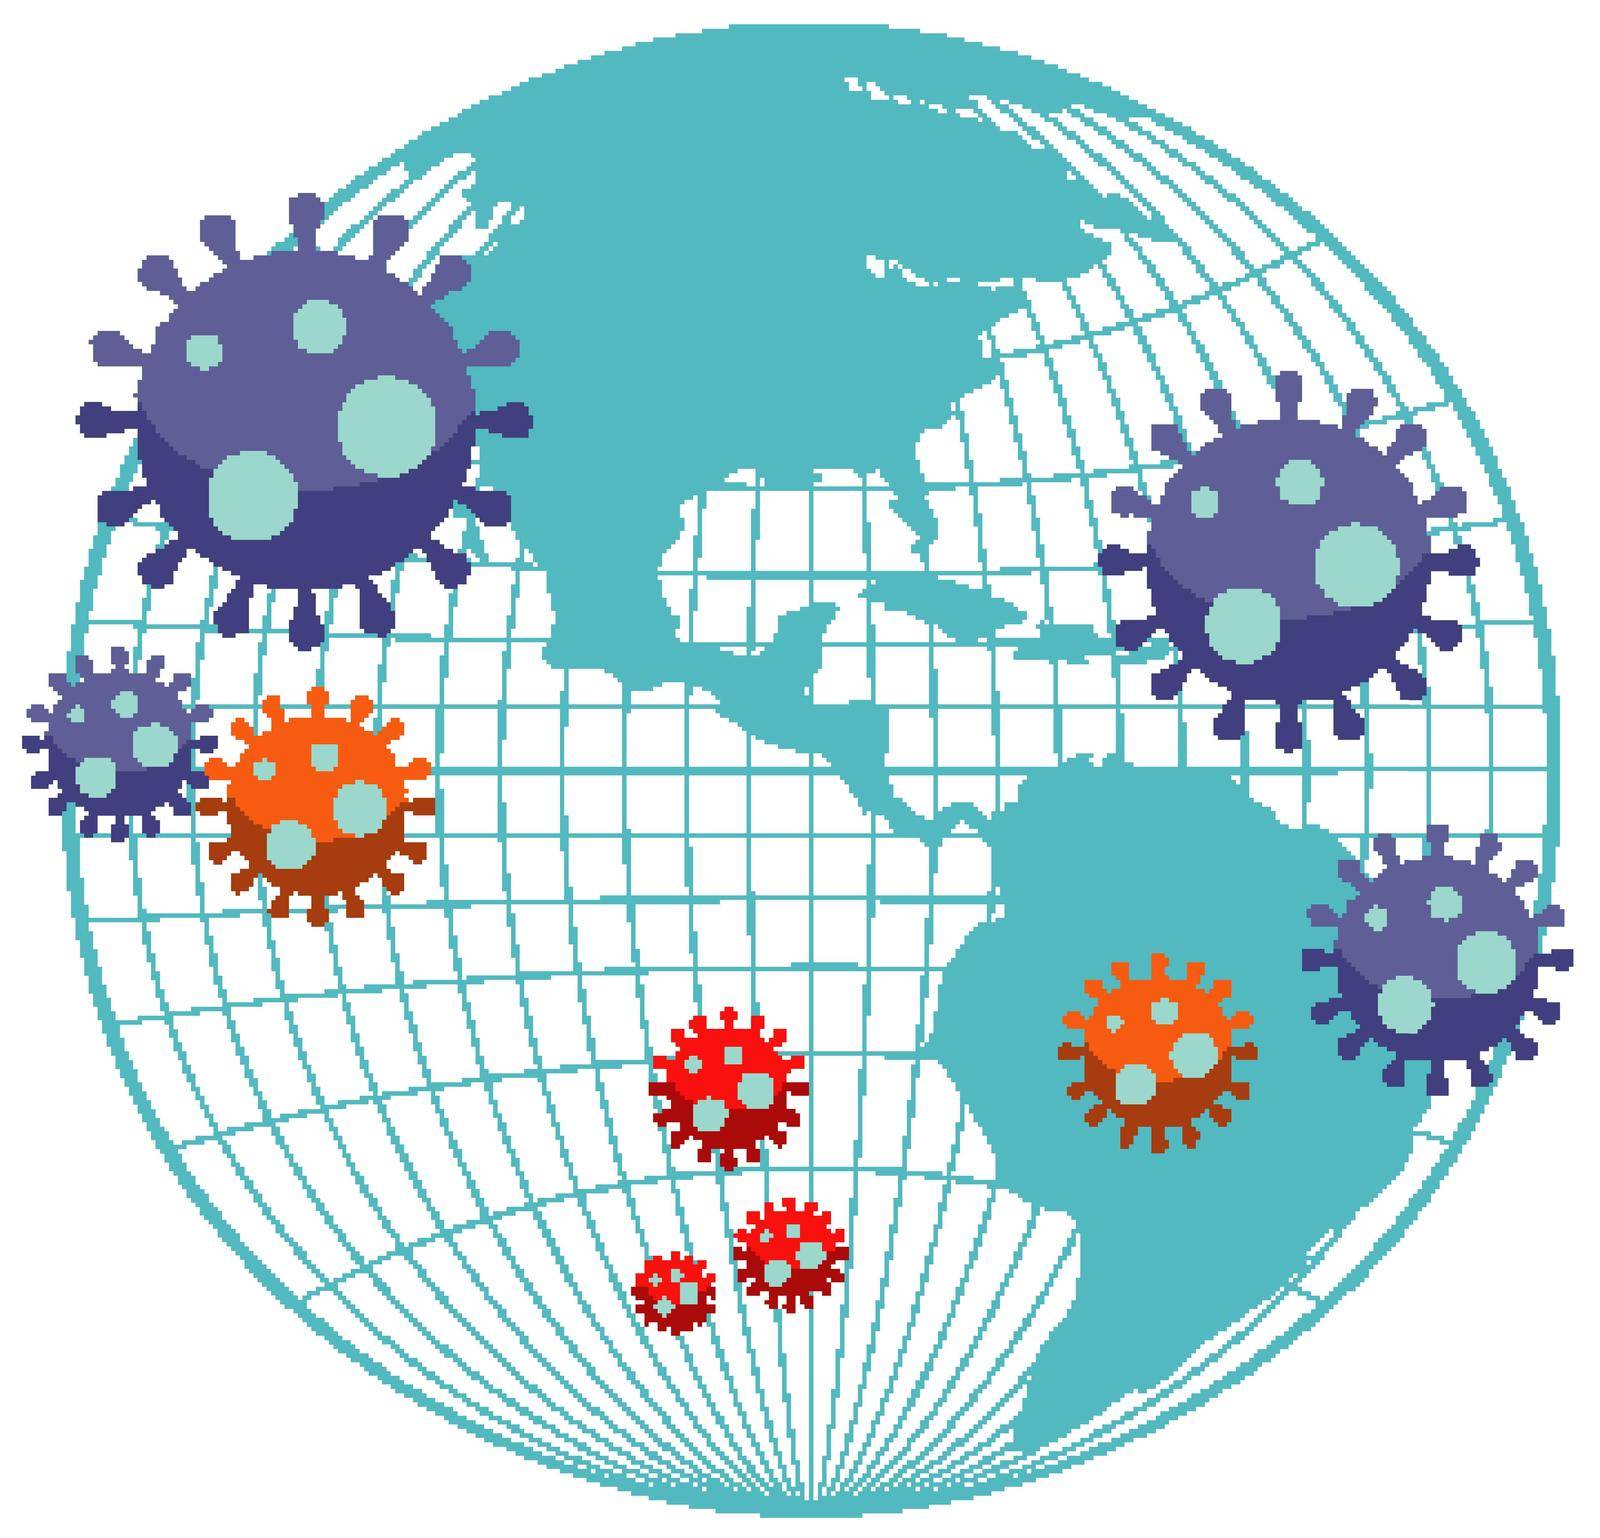 Coronavirus icon with earth globe icon by iimages